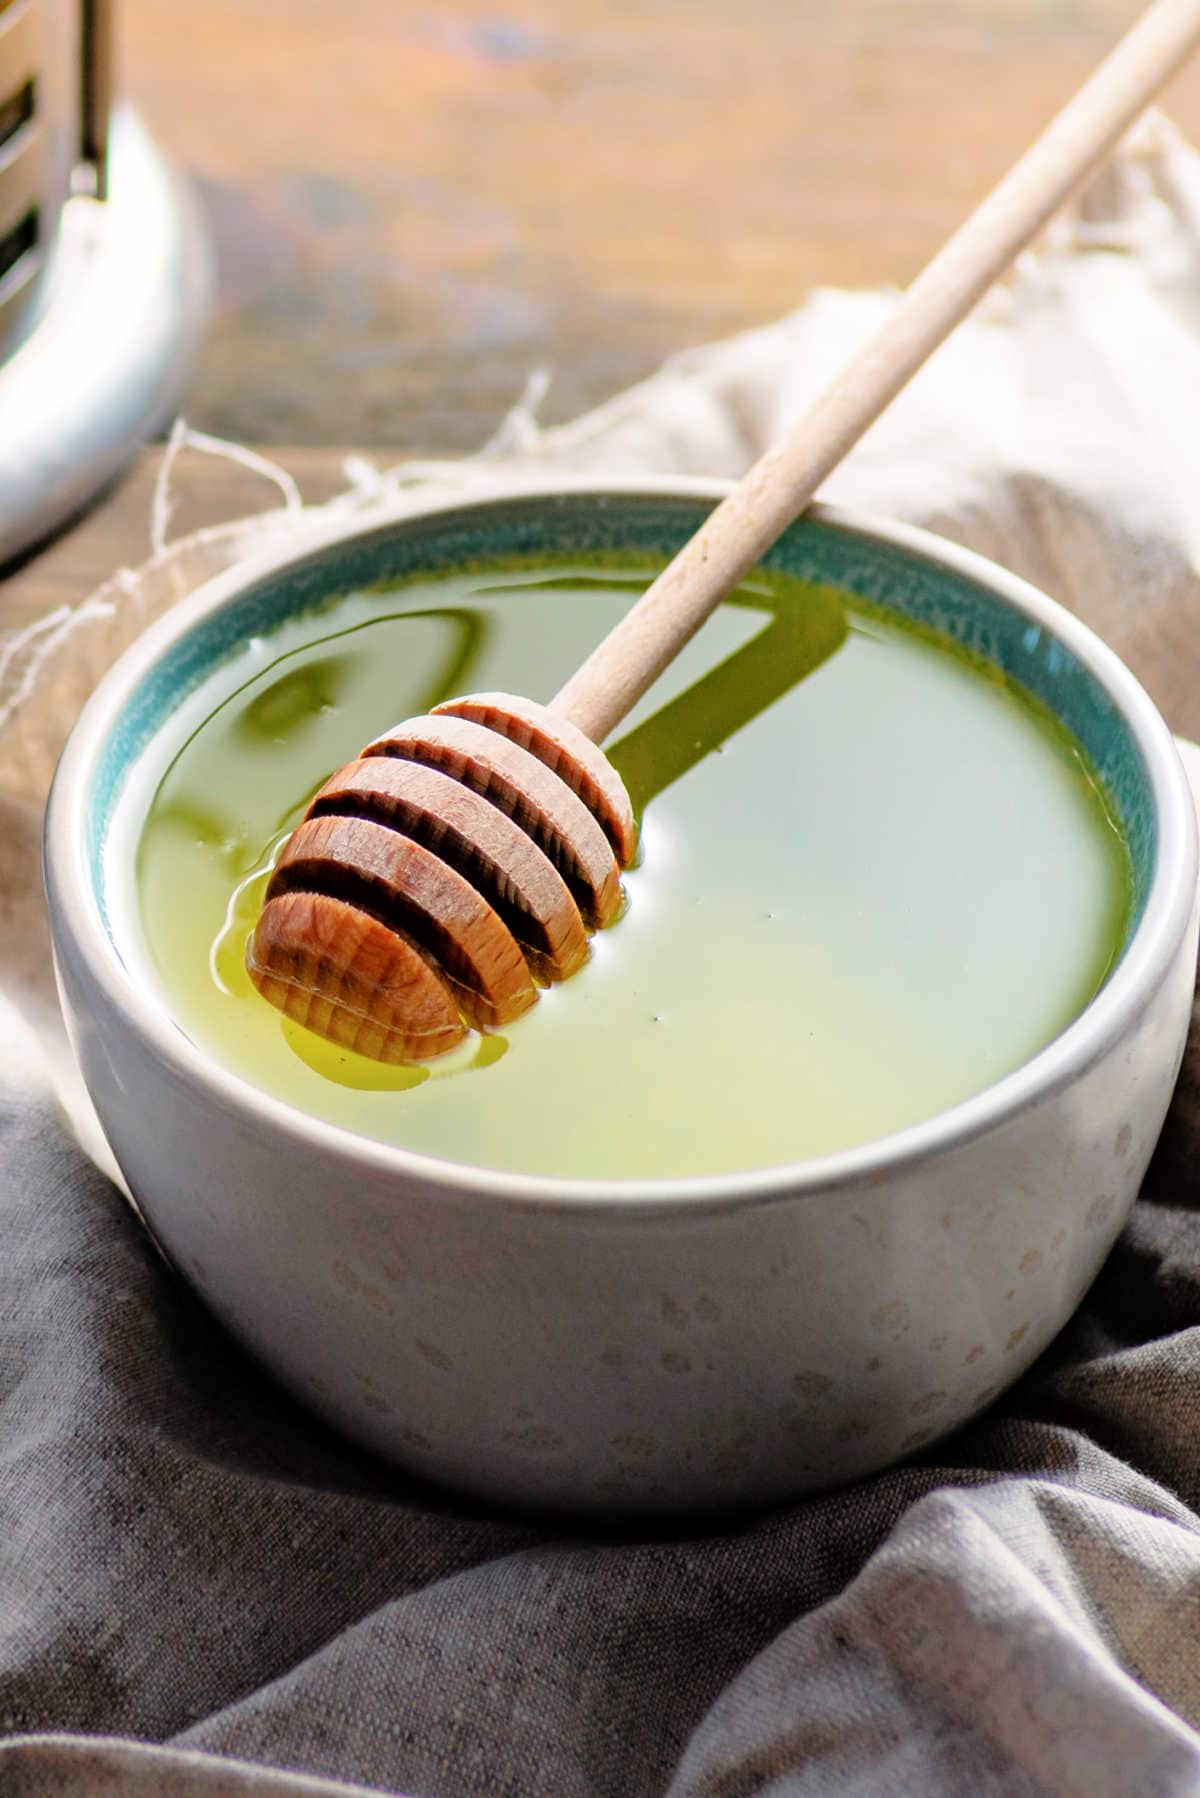 Green Tea with Honey Stick in a Mug